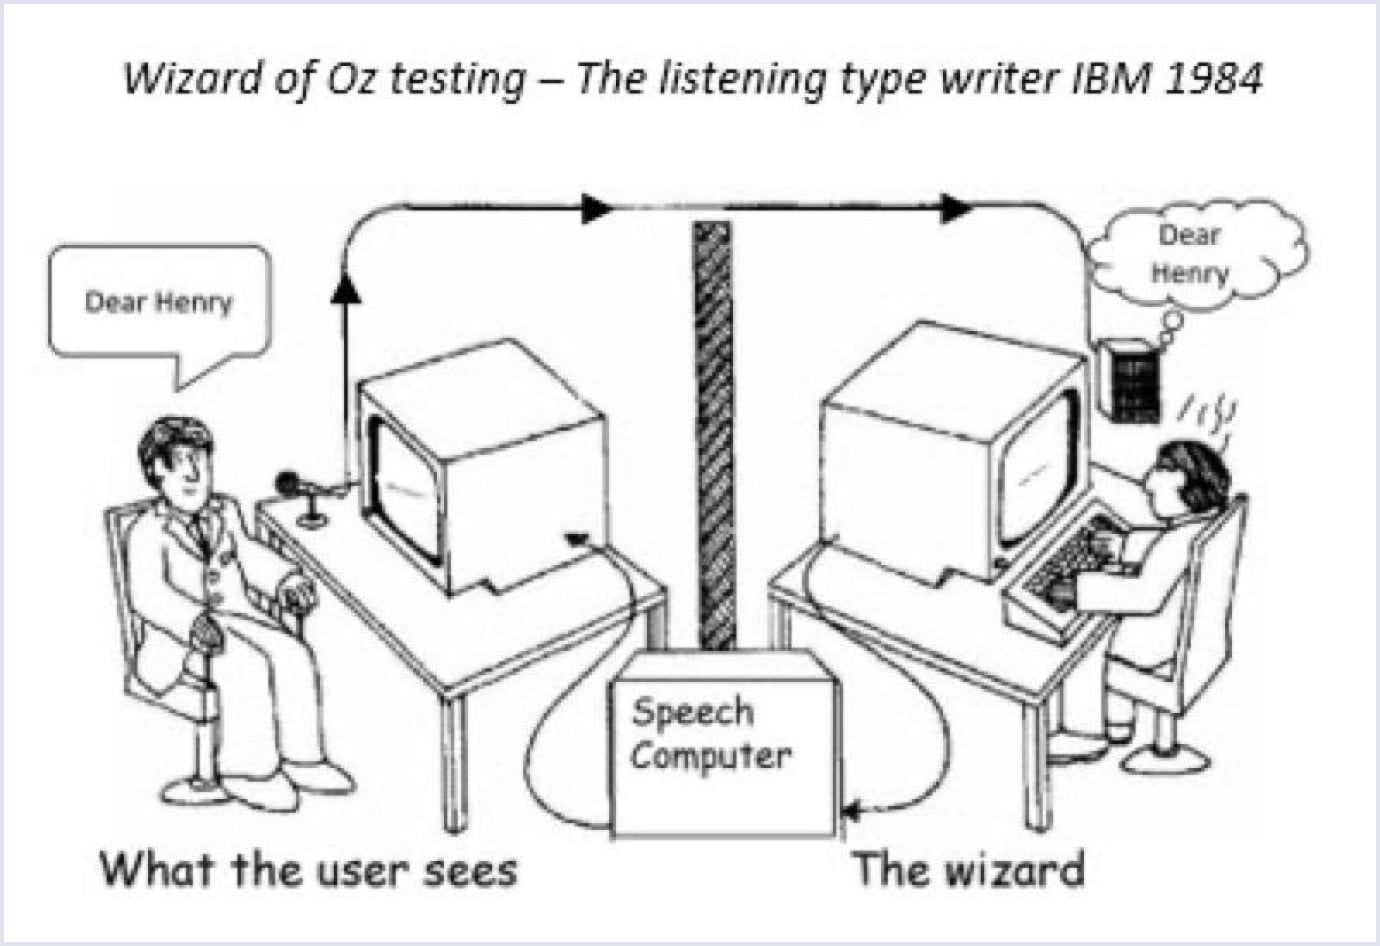 Wizard of Oz testing by IBM